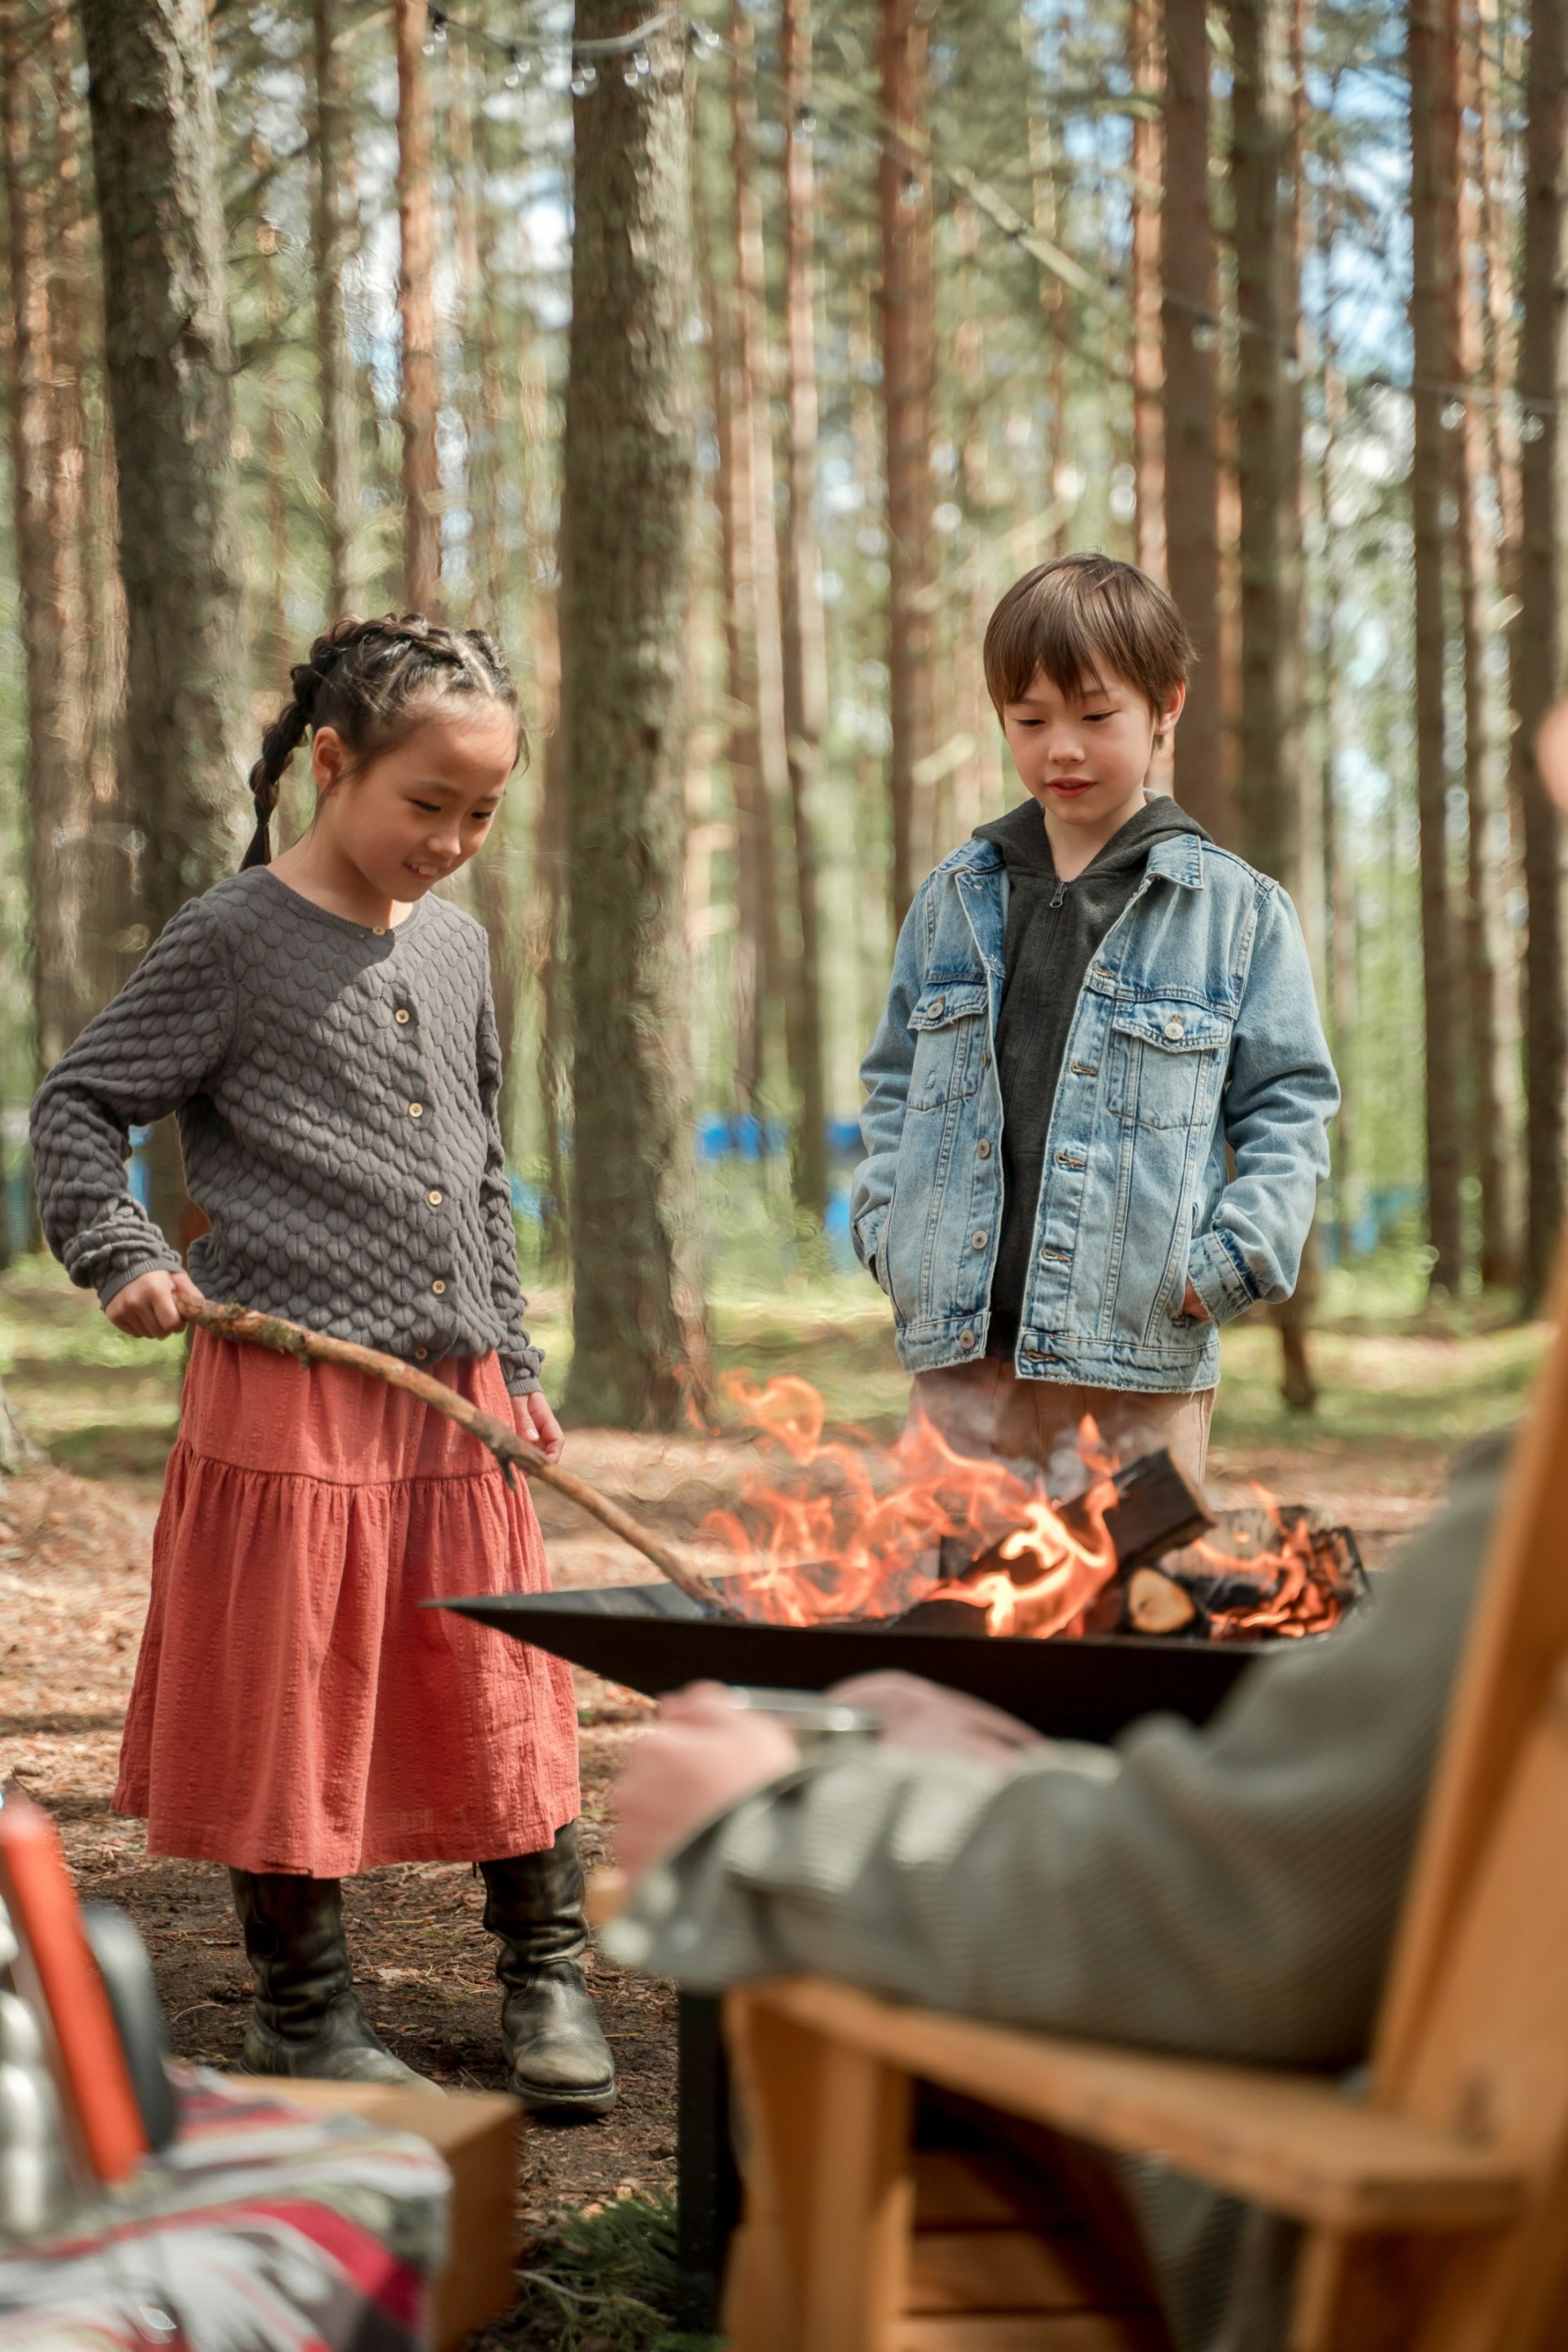 kids by a campfire